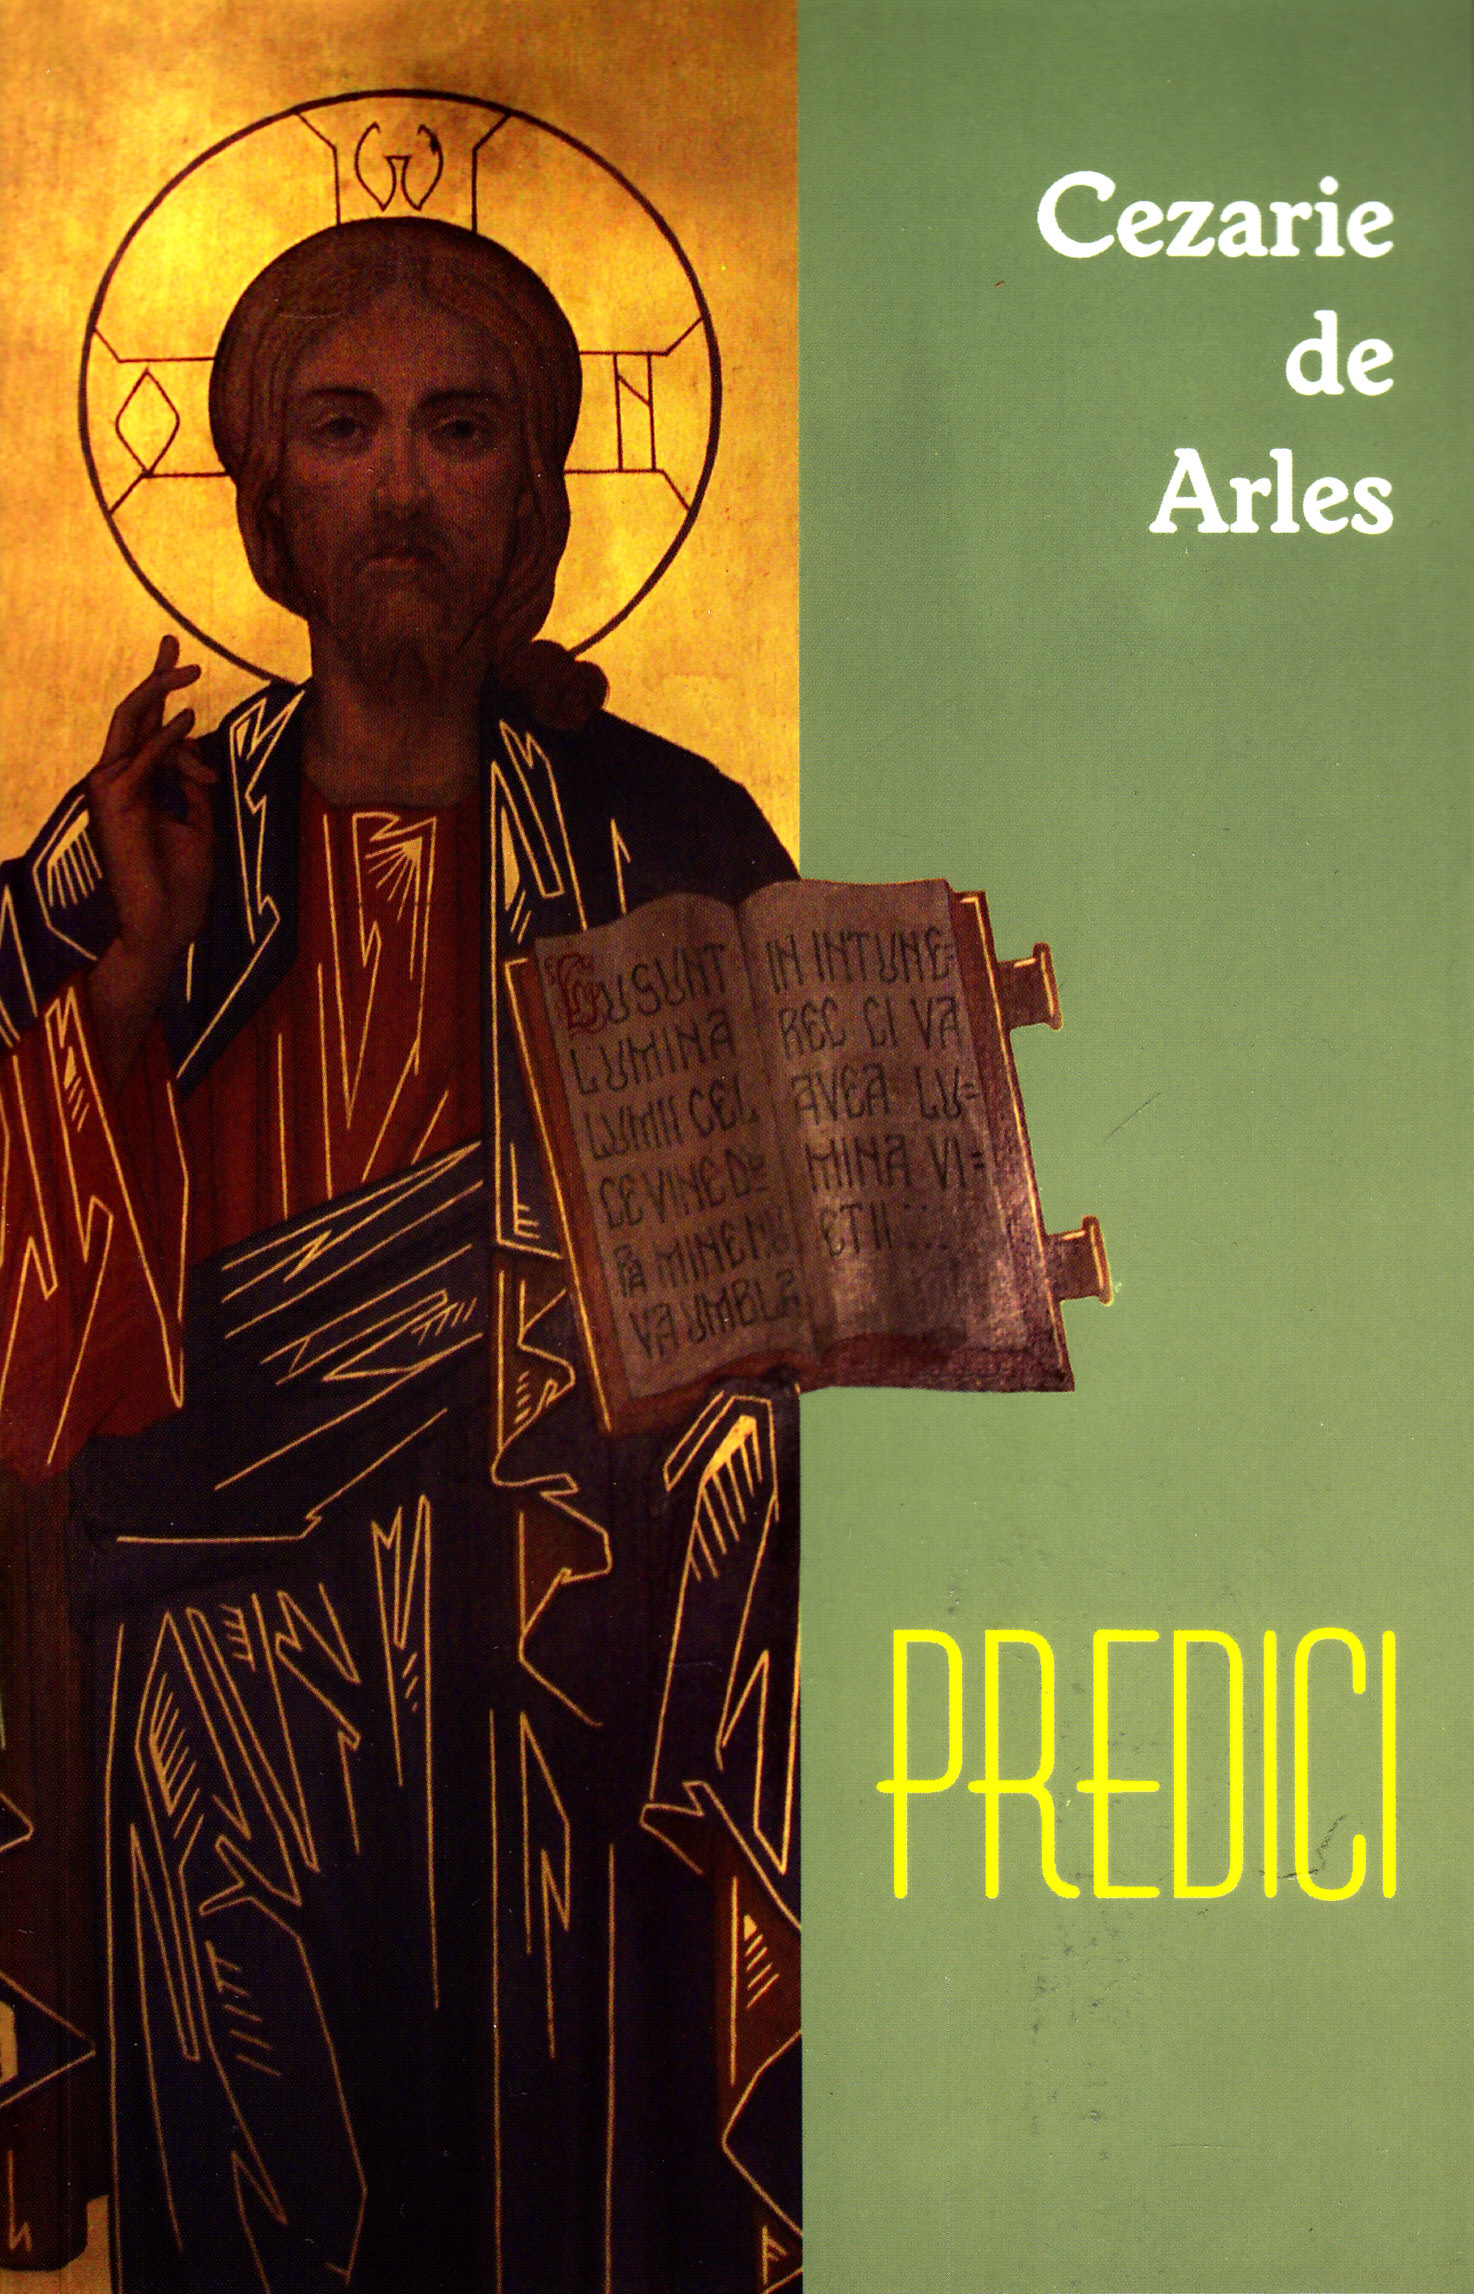 Predici - Cezarie De Arles